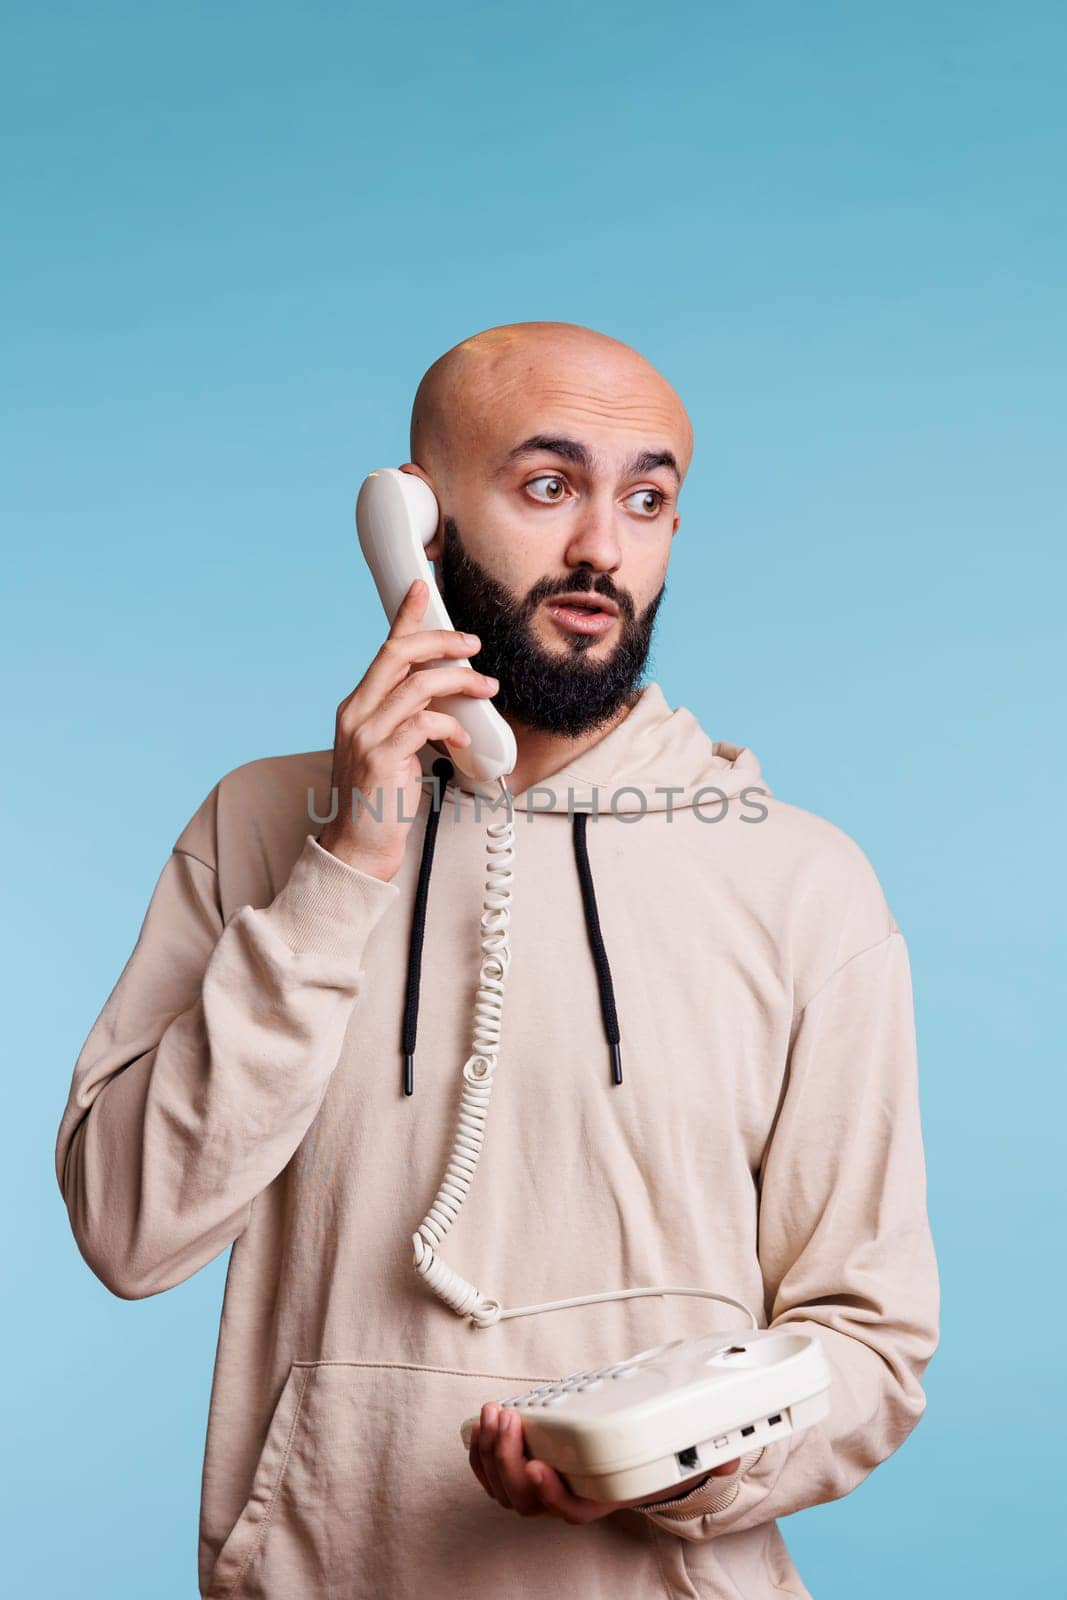 Arab man answering landline phone call by DCStudio